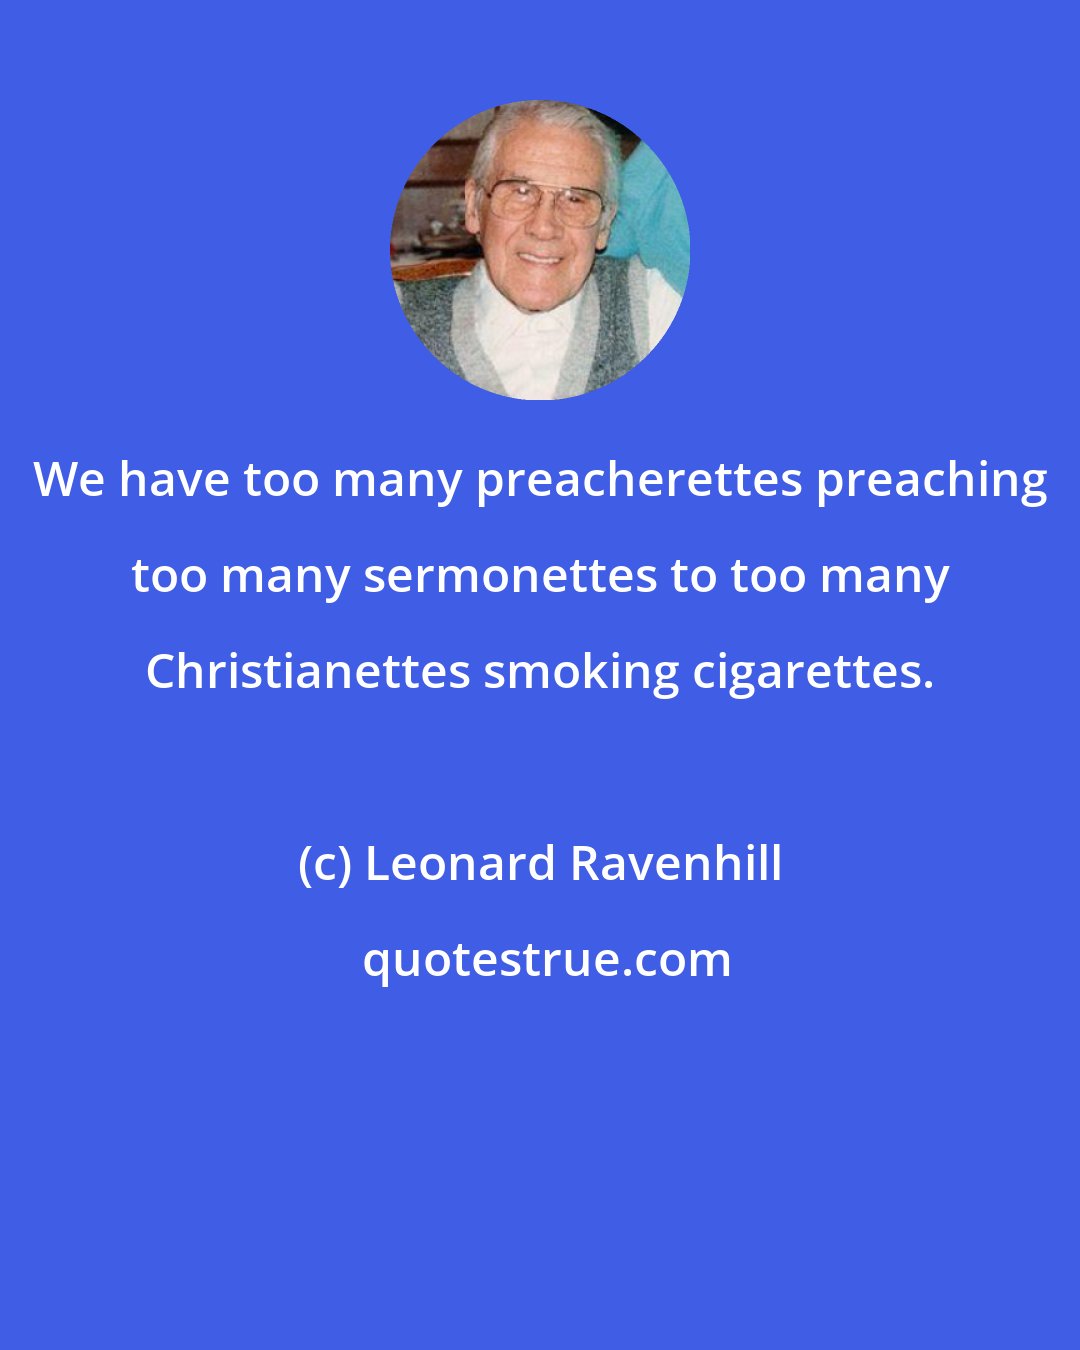 Leonard Ravenhill: We have too many preacherettes preaching too many sermonettes to too many Christianettes smoking cigarettes.